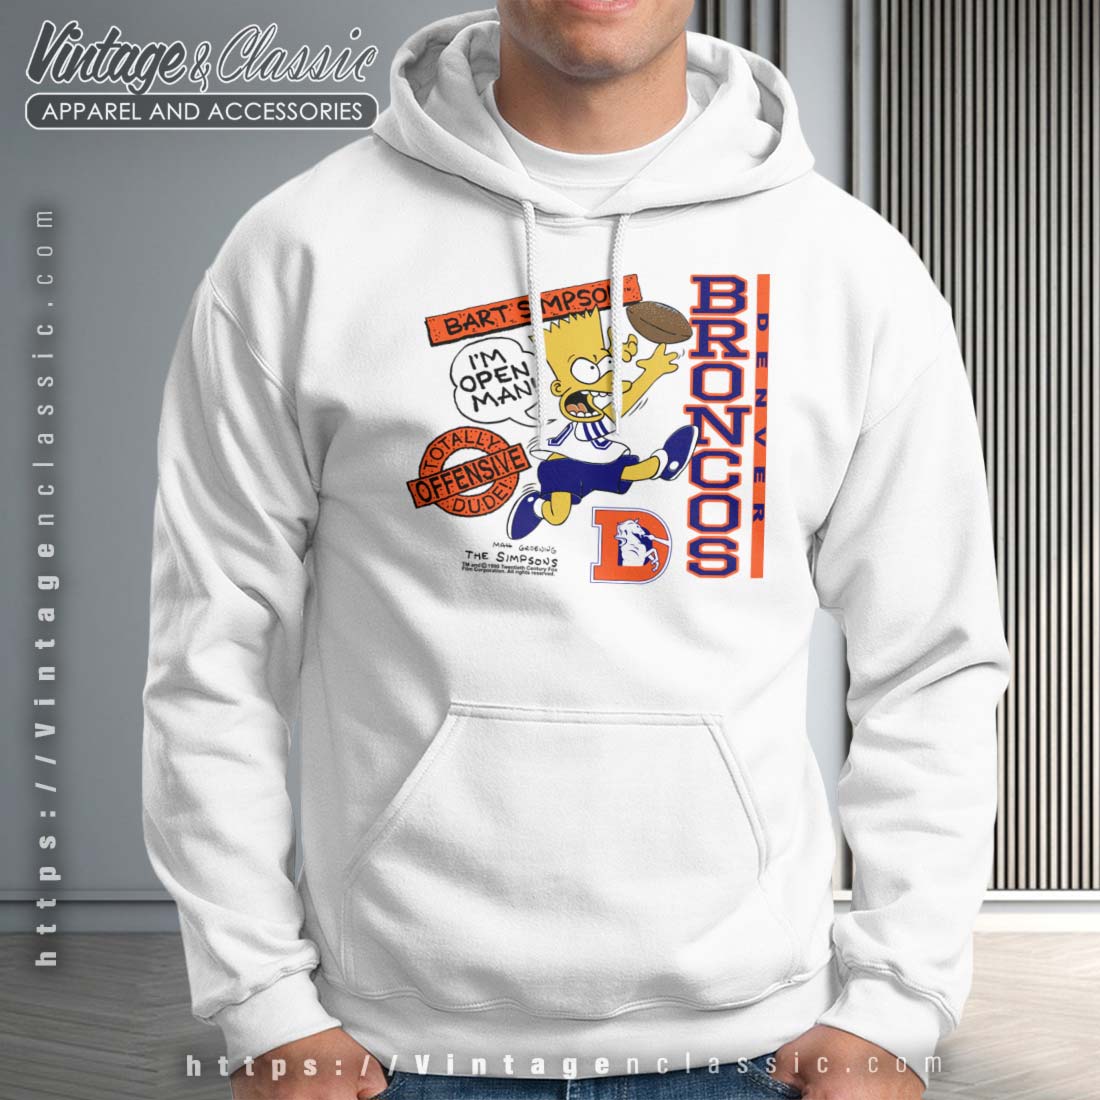 Bart Simpson Denver Broncos NFL Shirt - Vintagenclassic Tee